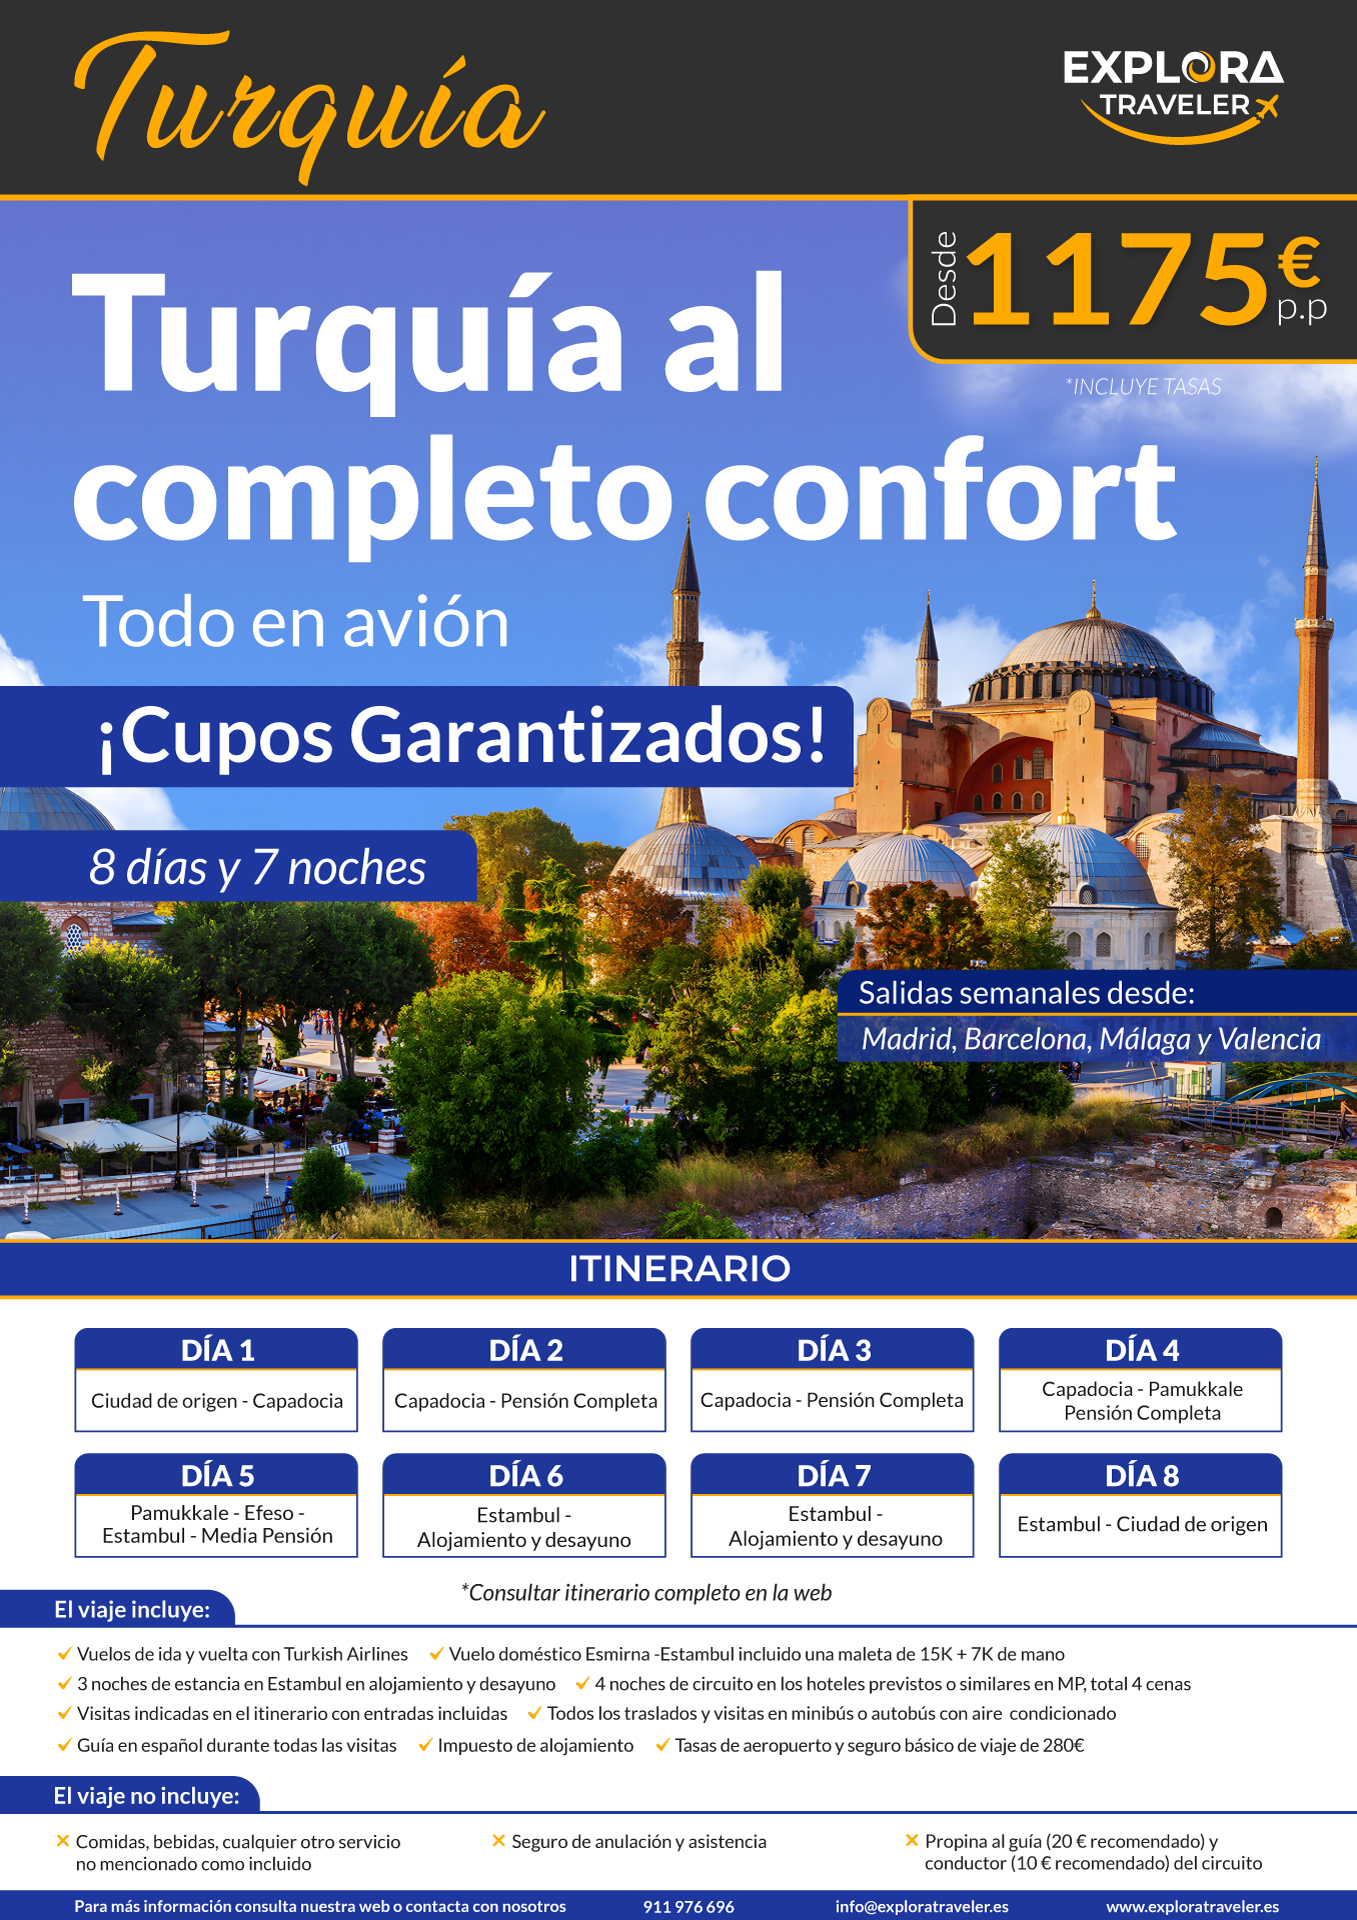 Oferta Explora Traveler Turquia al Completo Confort 8 dias Verano 2023 salidas desde Madrid Barcelona Valencia Malaga vuelos Turkish Airlines